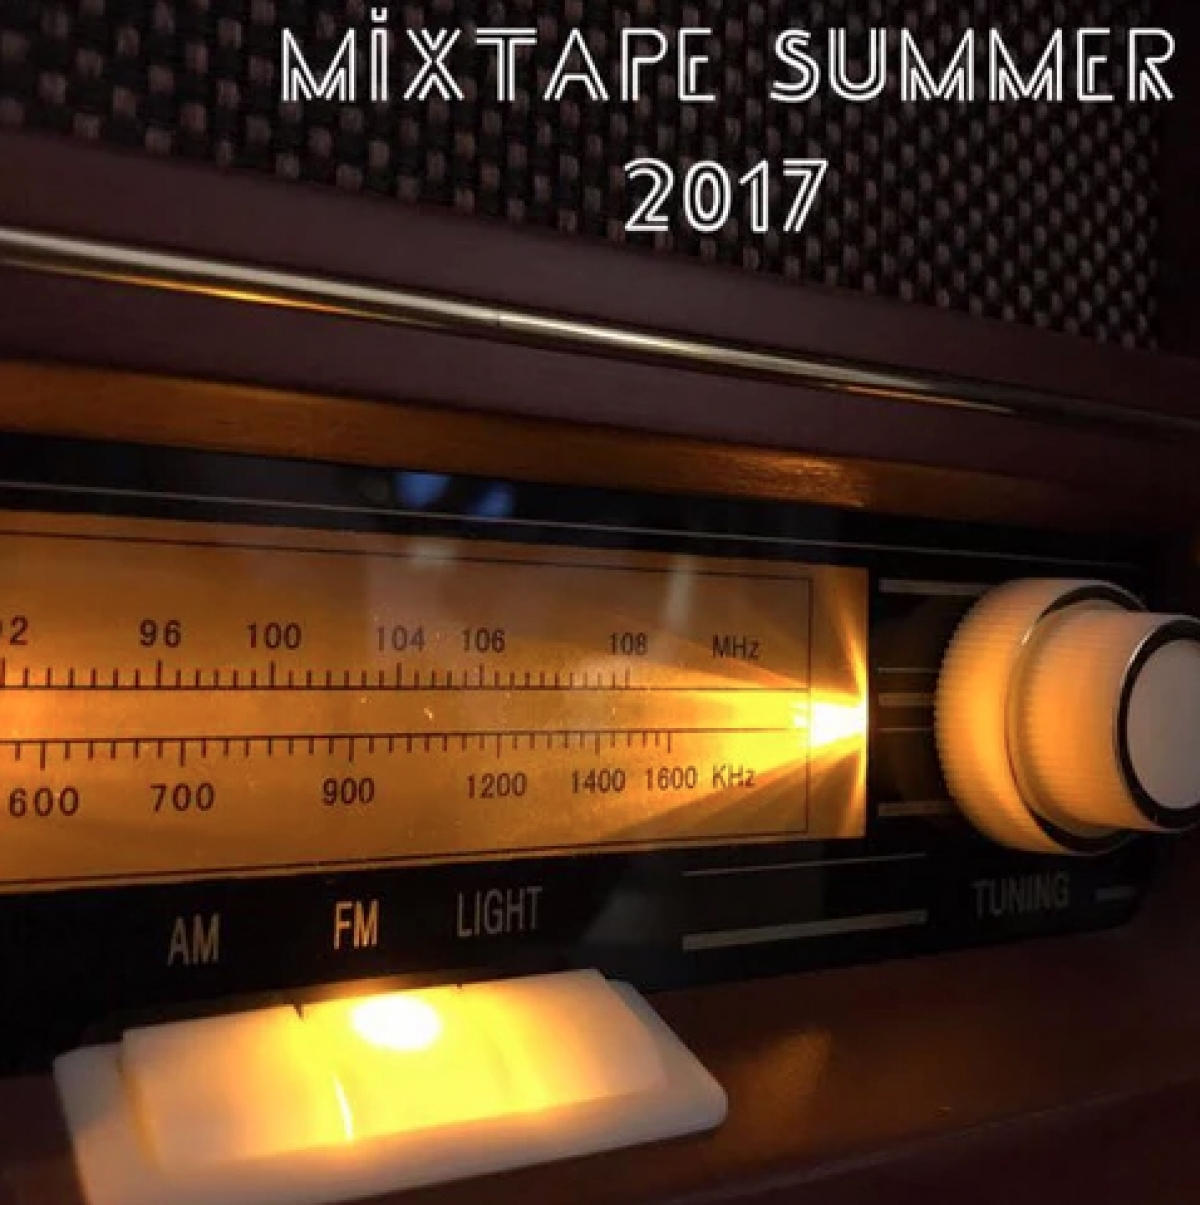 Mixtape. Summer 2017